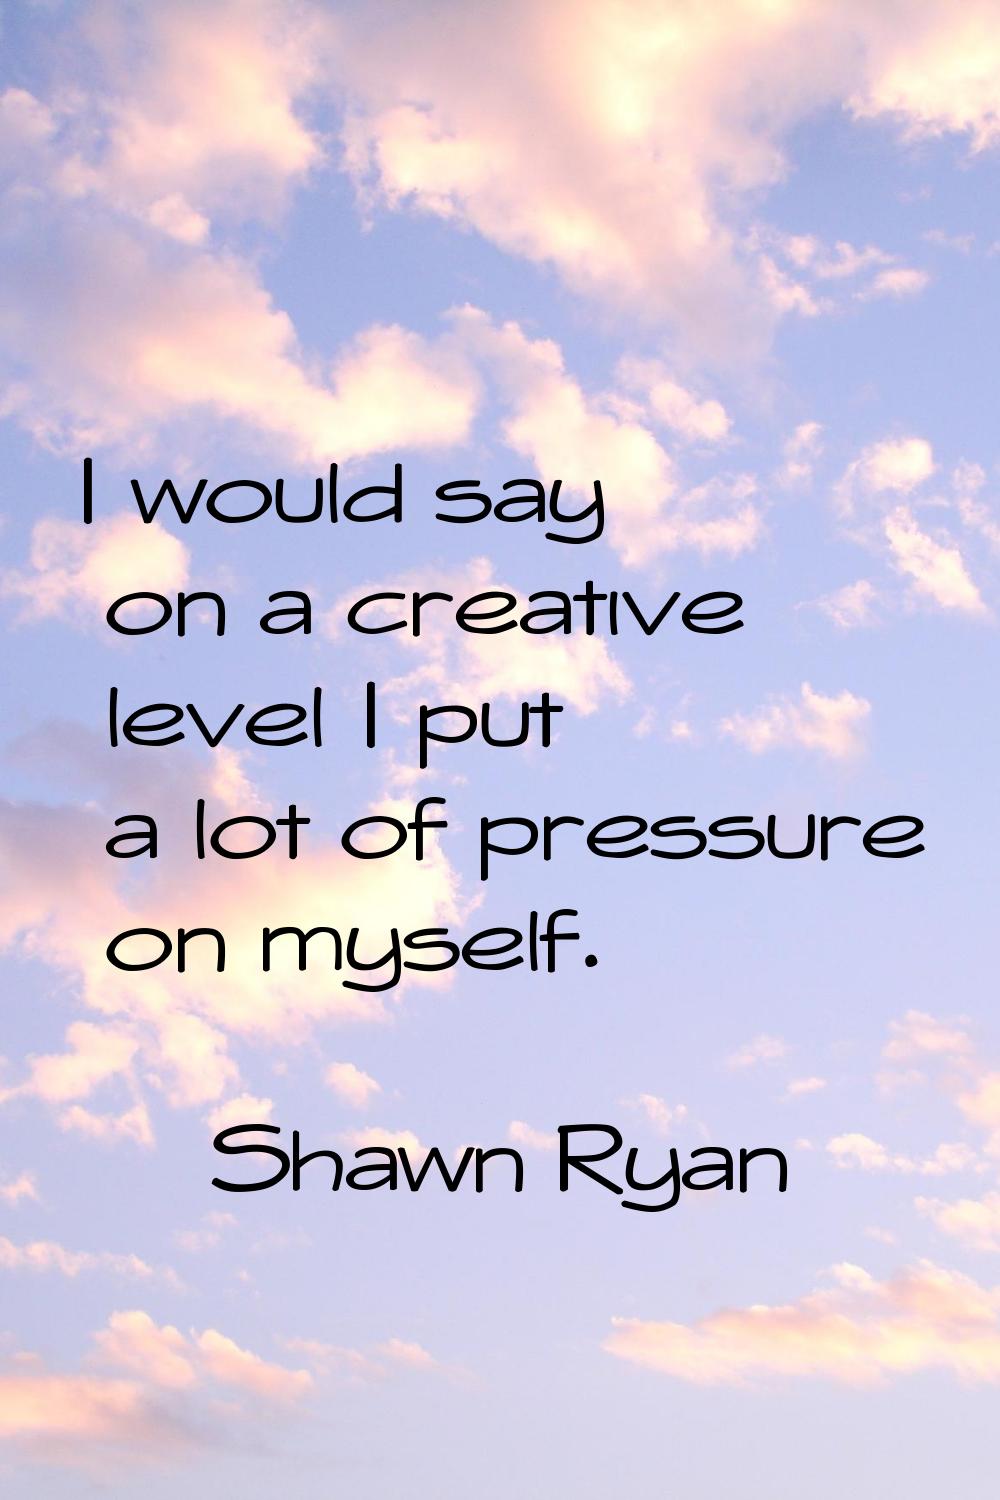 I would say on a creative level I put a lot of pressure on myself.